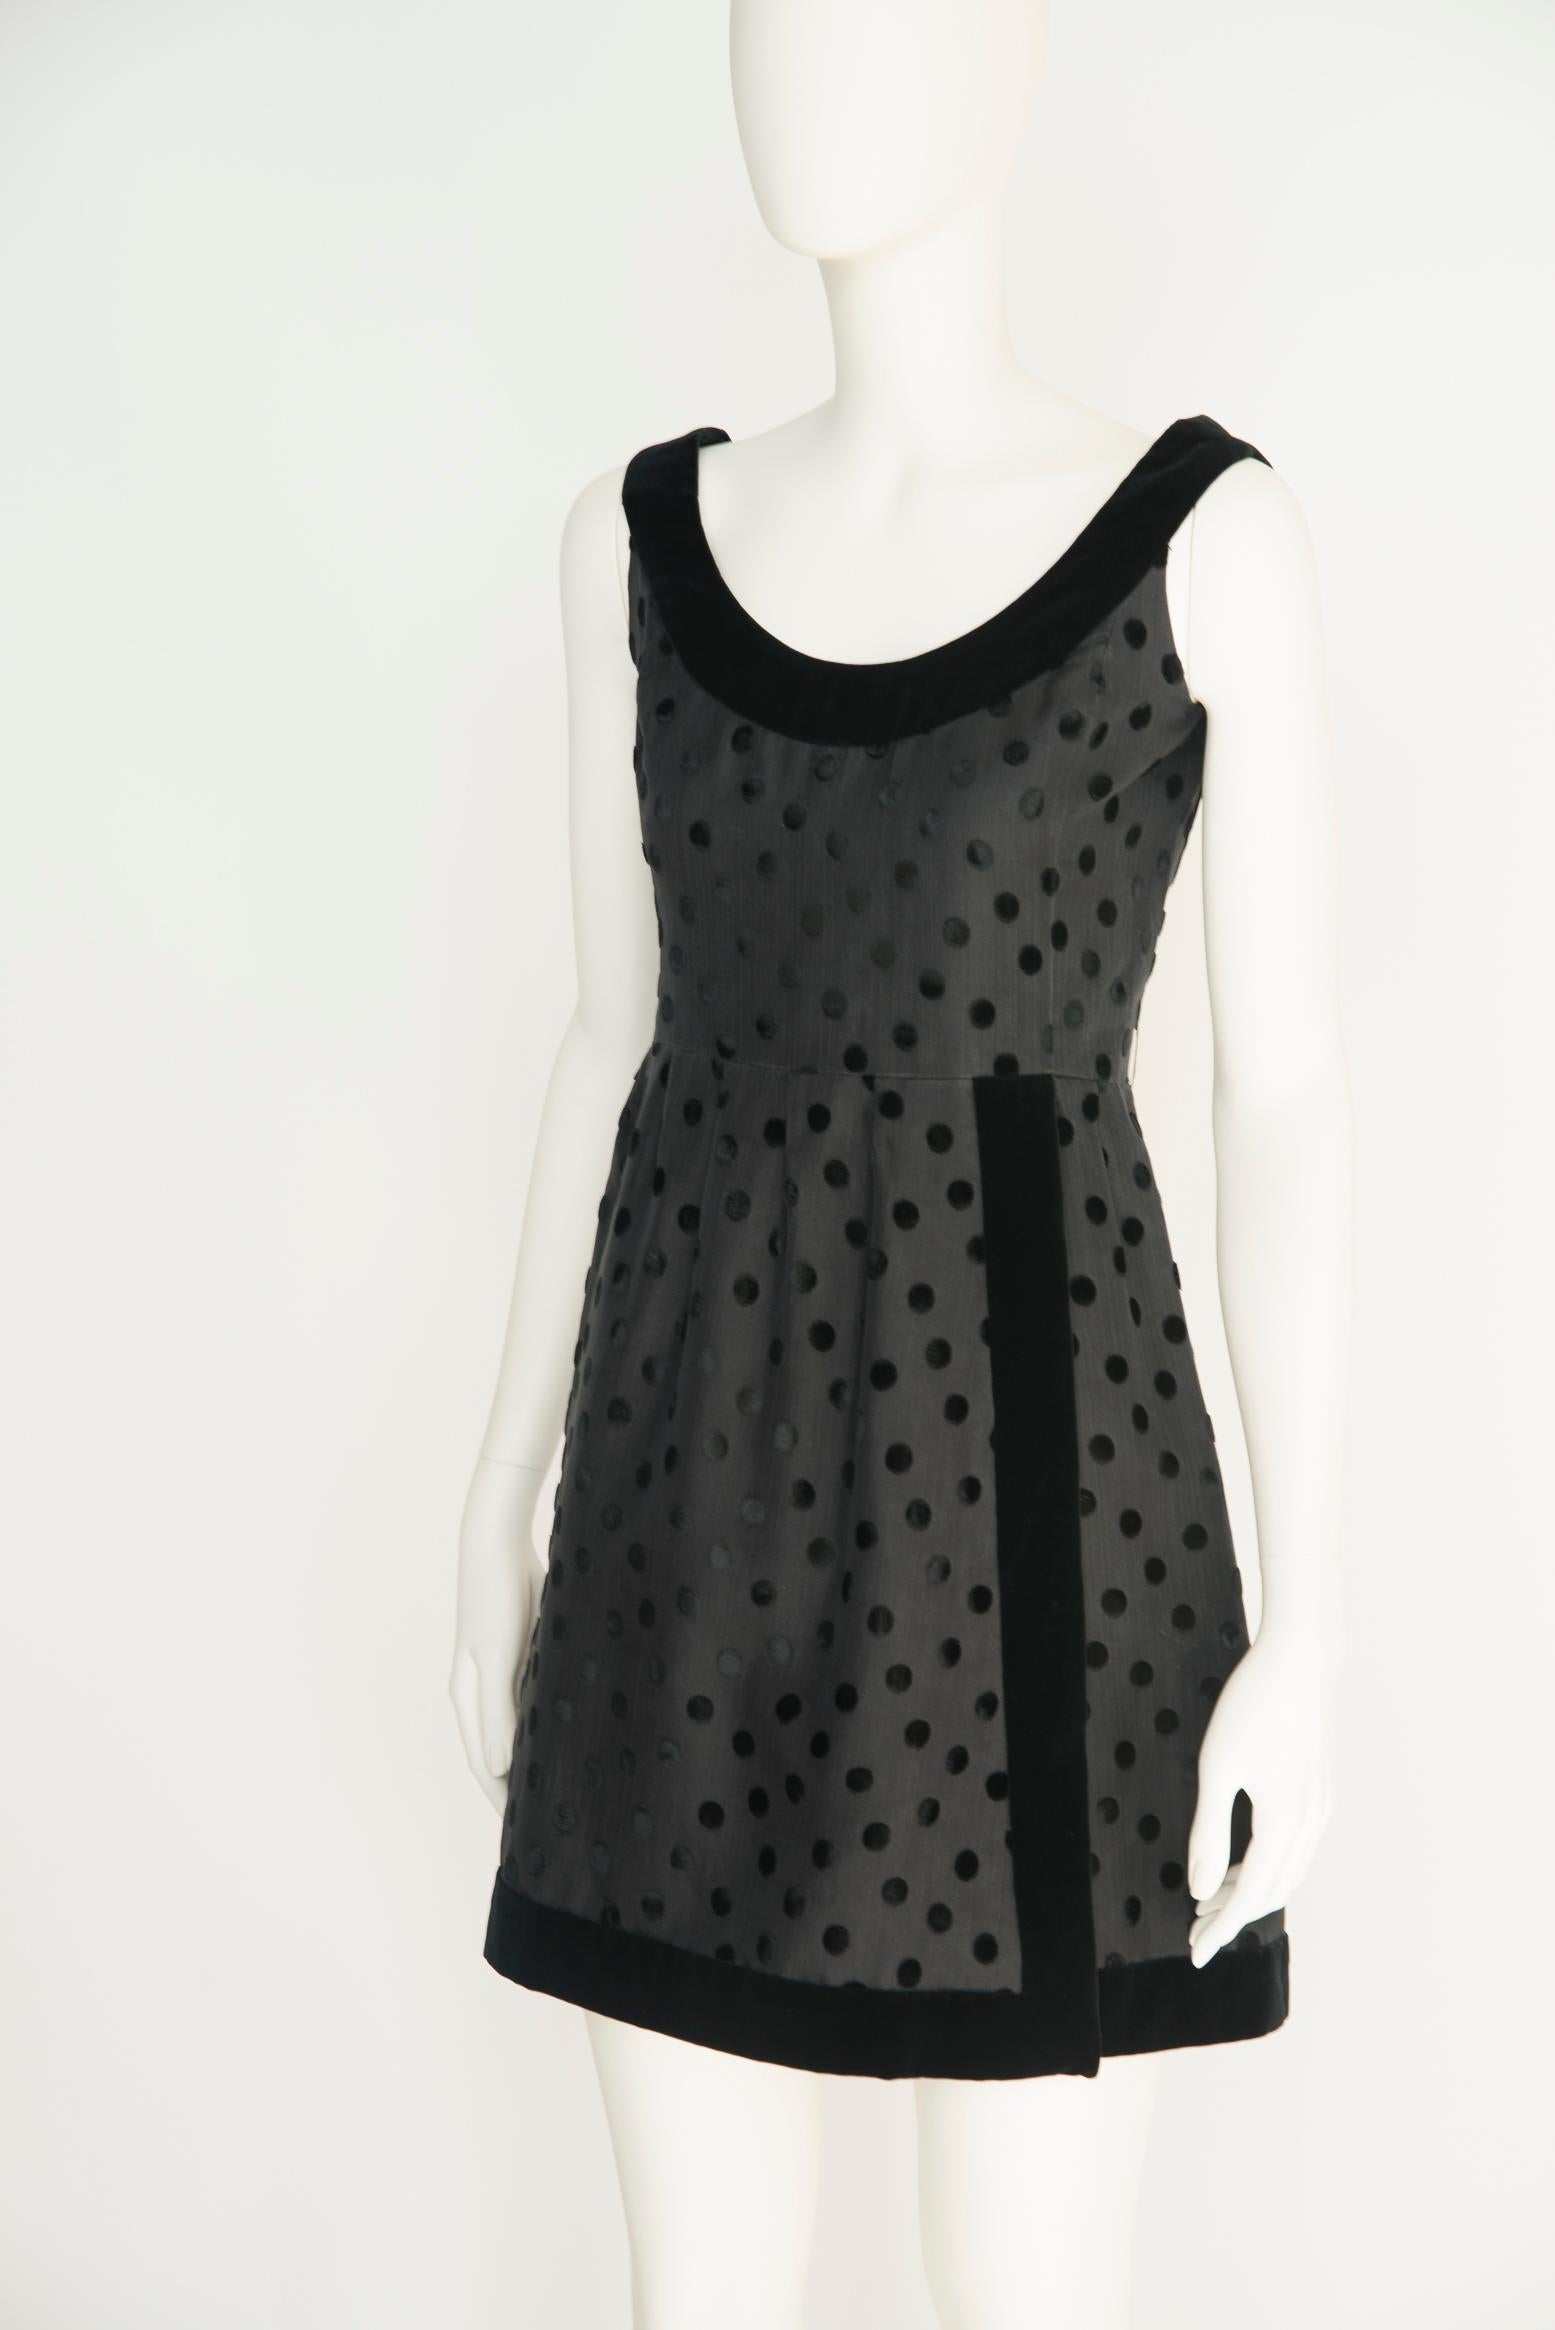 Jean Louis Scherrer Haute Couture Little Black Dress In Good Condition For Sale In Geneva, CH